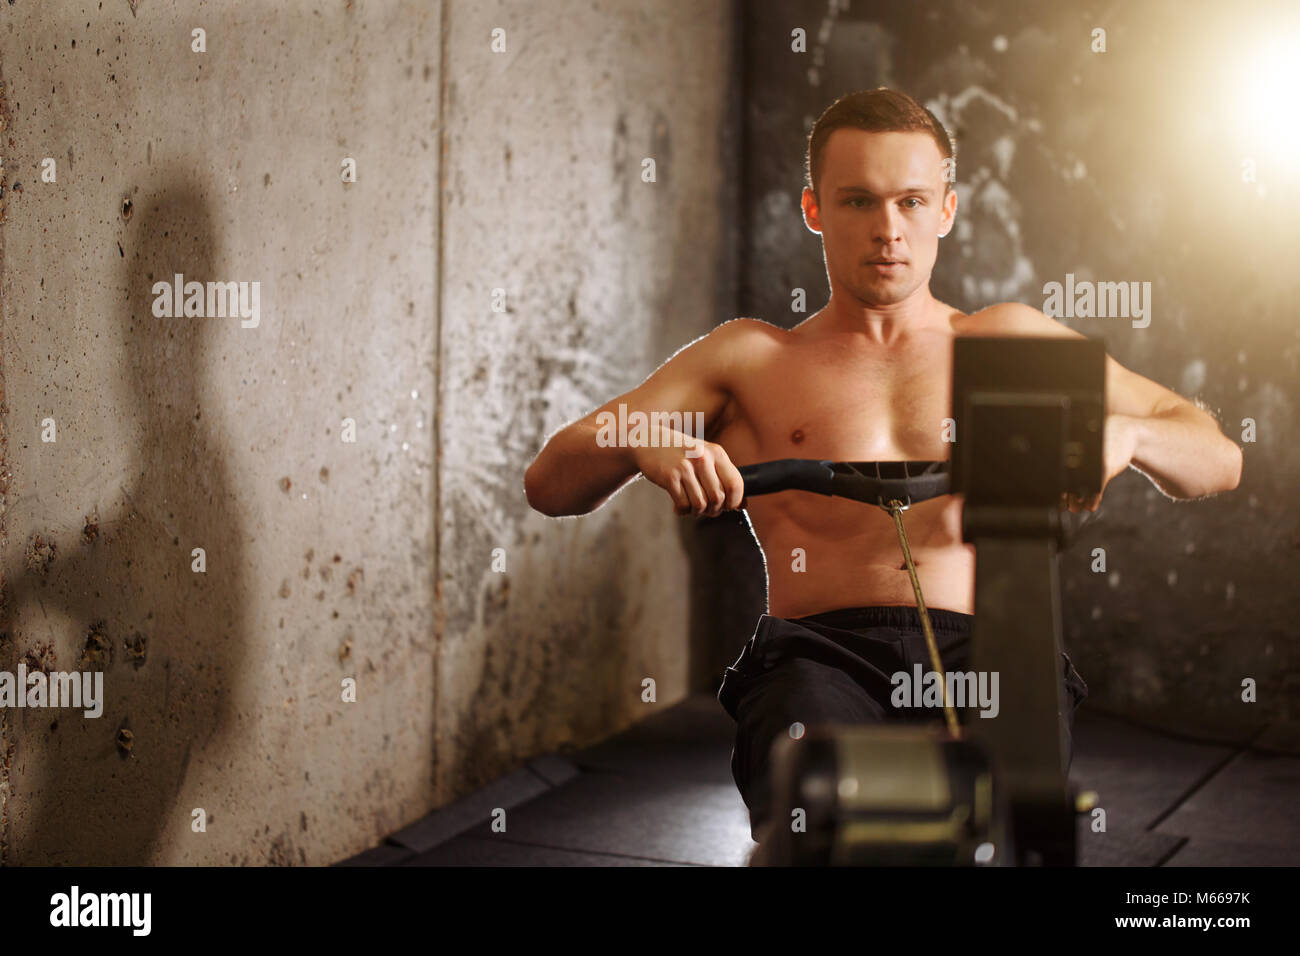 man training on row machine in gym Stock Photo